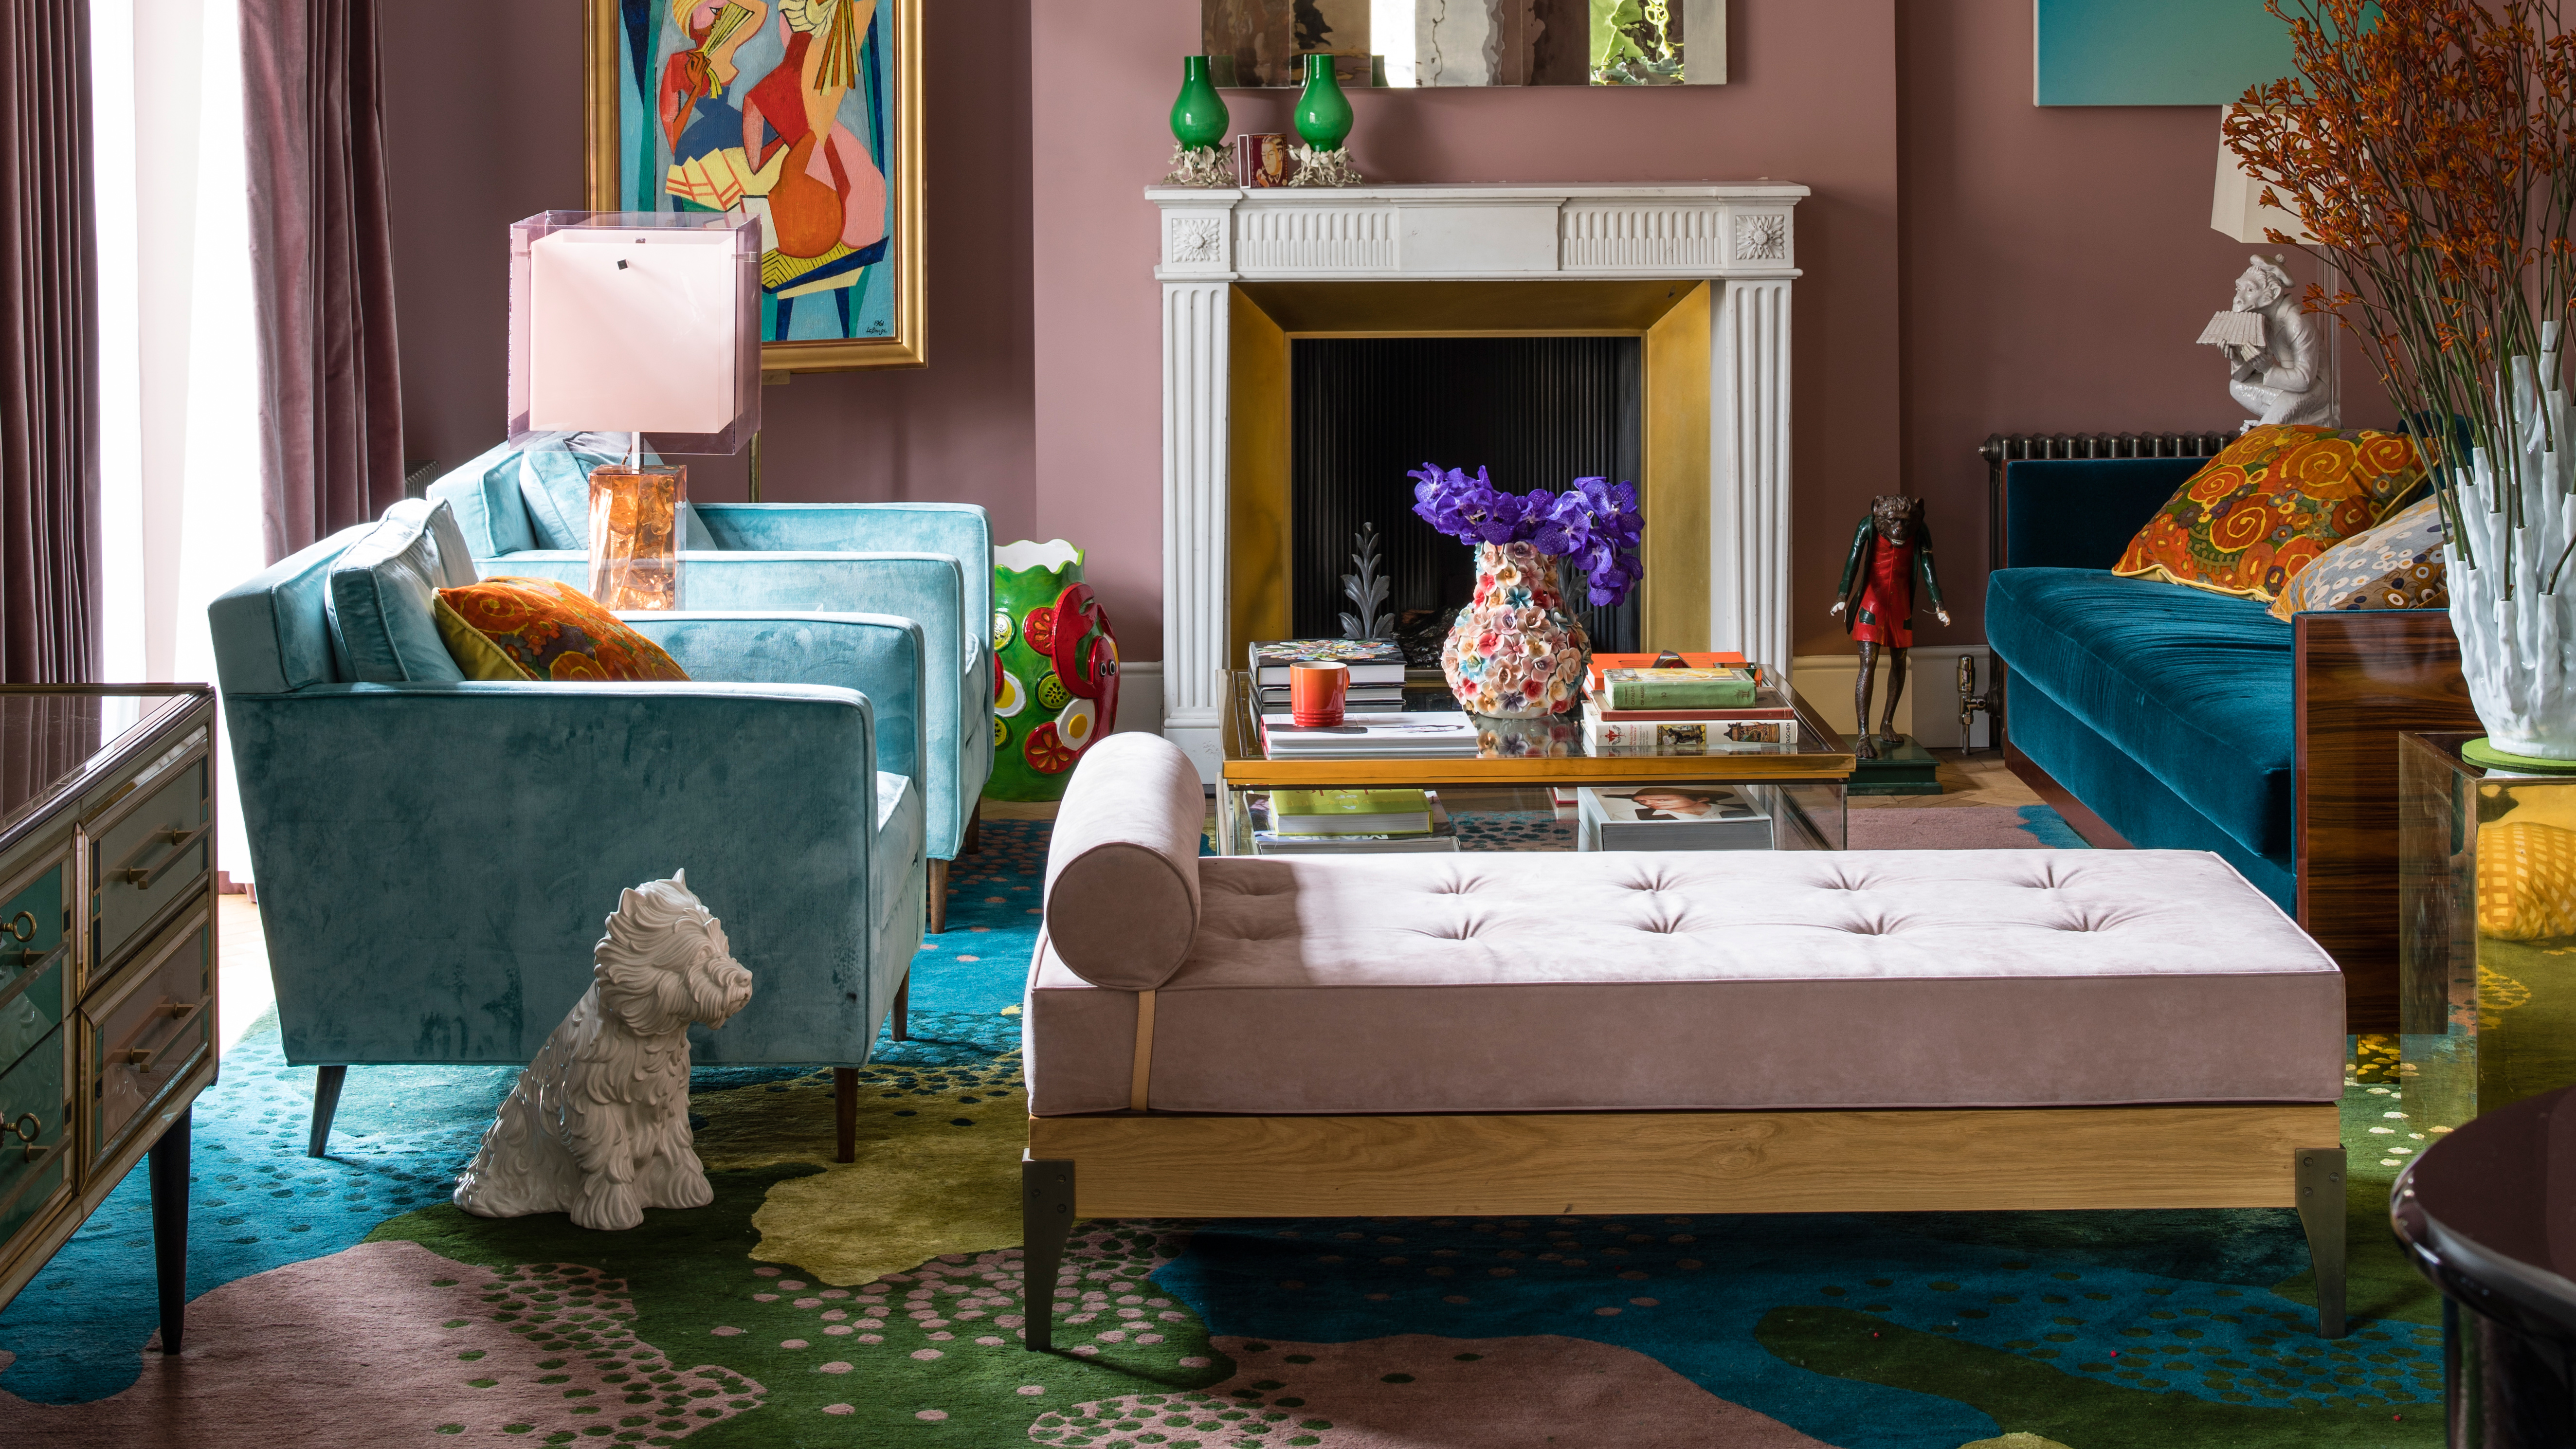 10 Living Room Carpet Ideas To Add